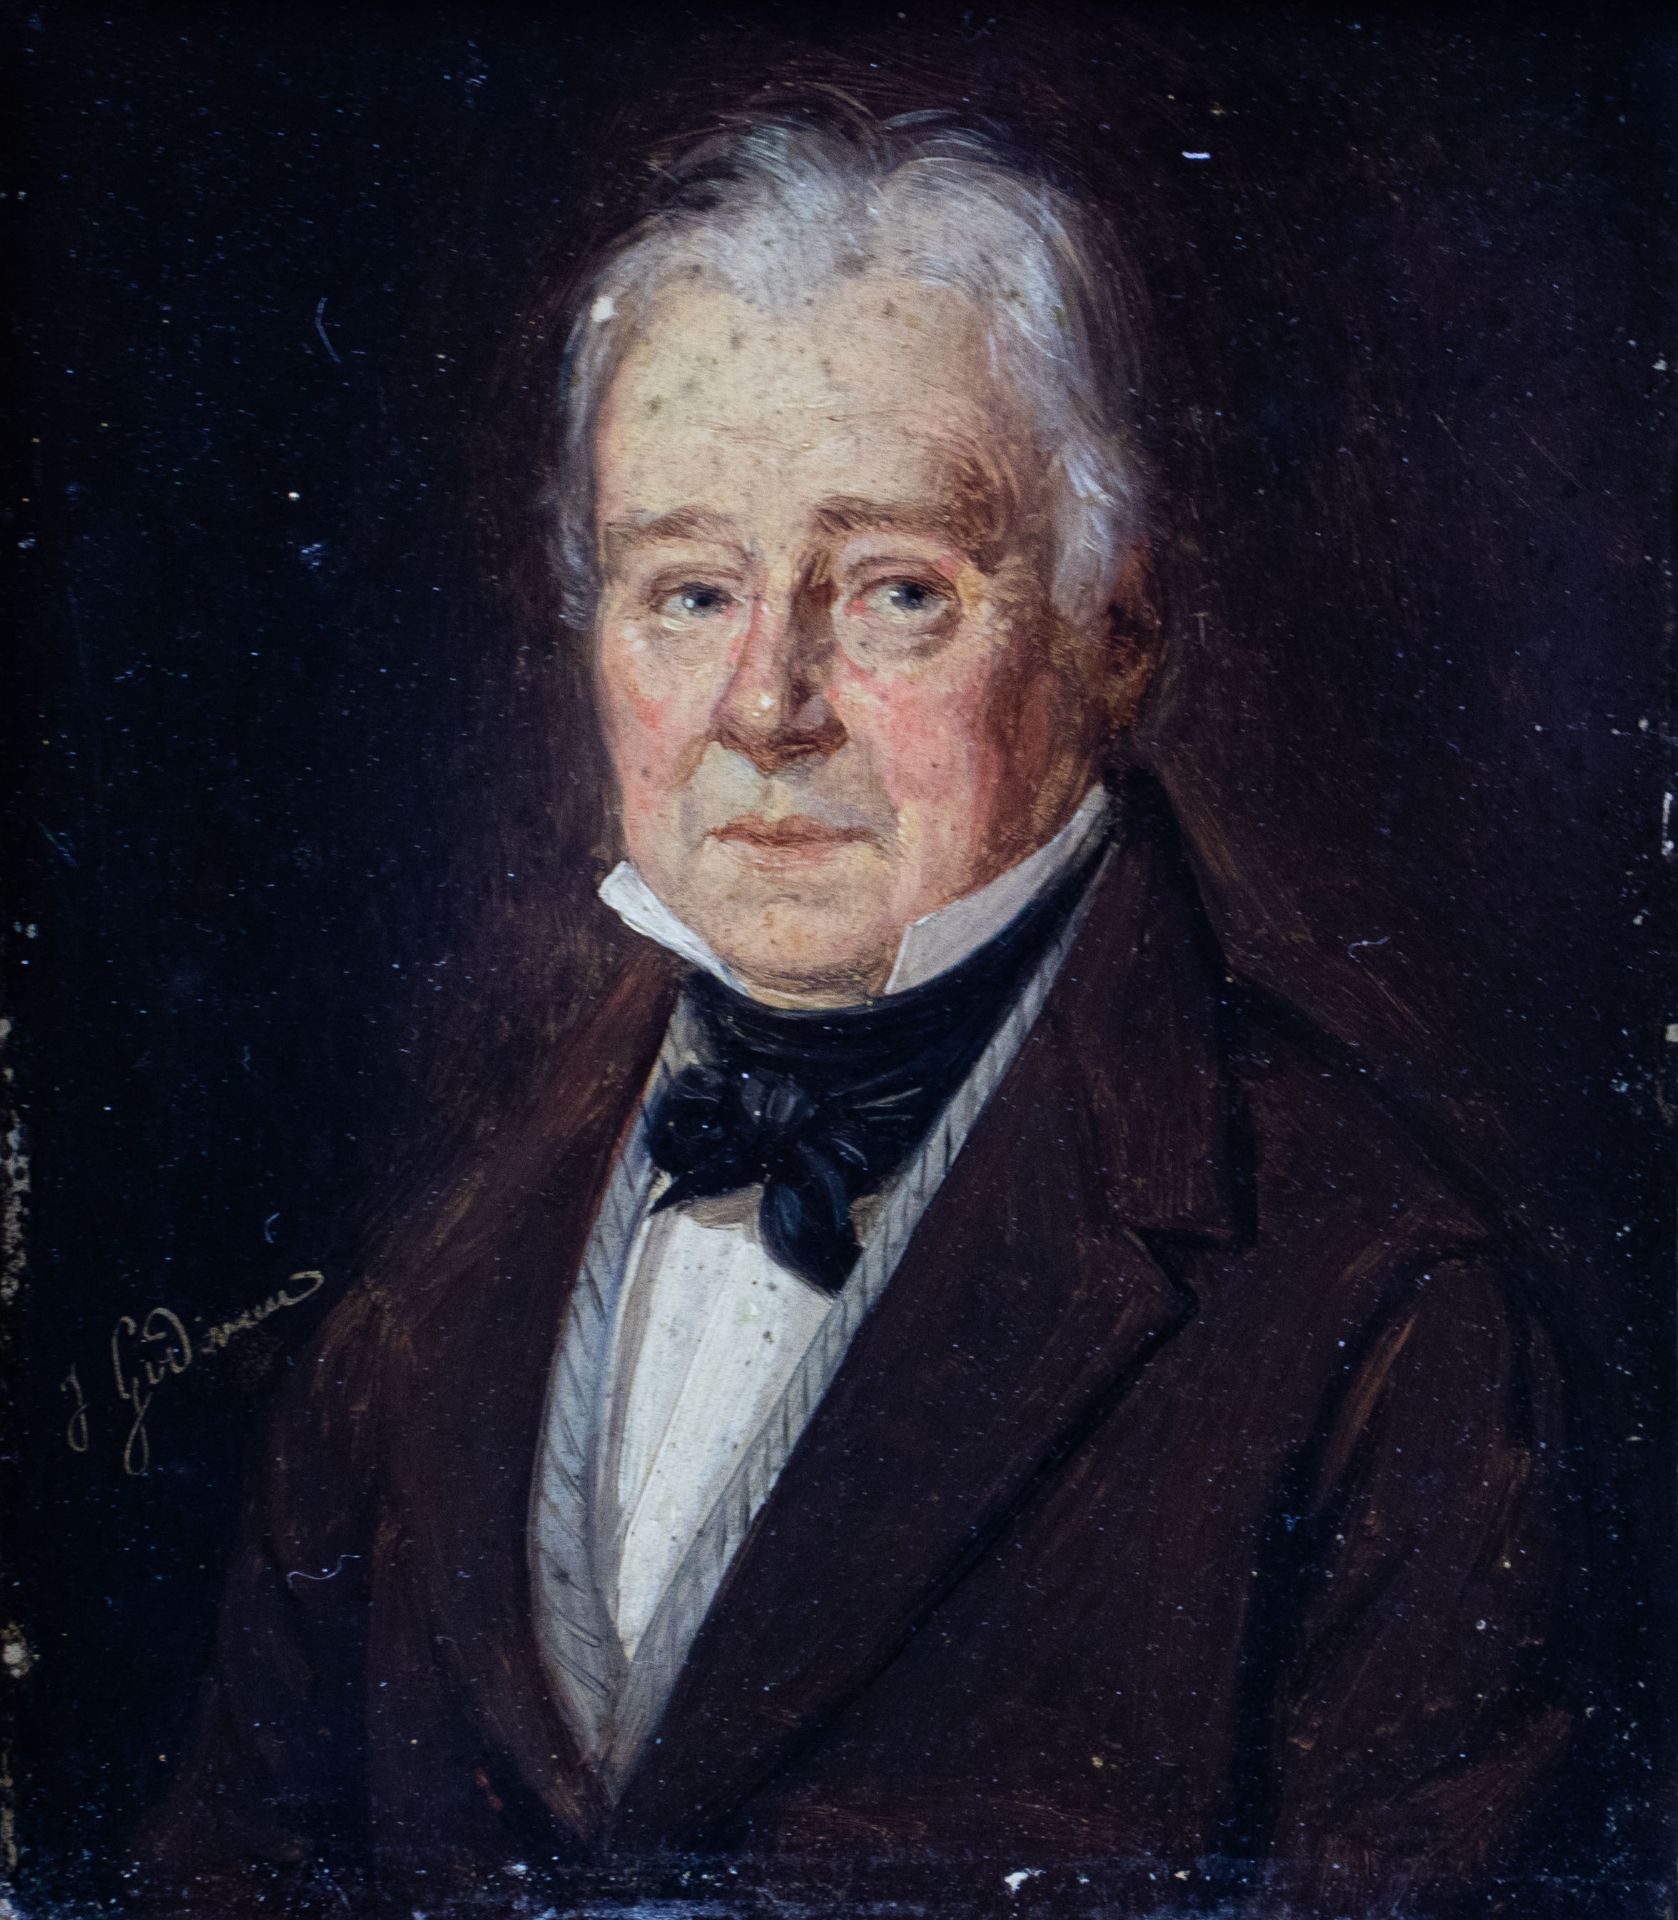 Portrait of a Gentleman 19th C.